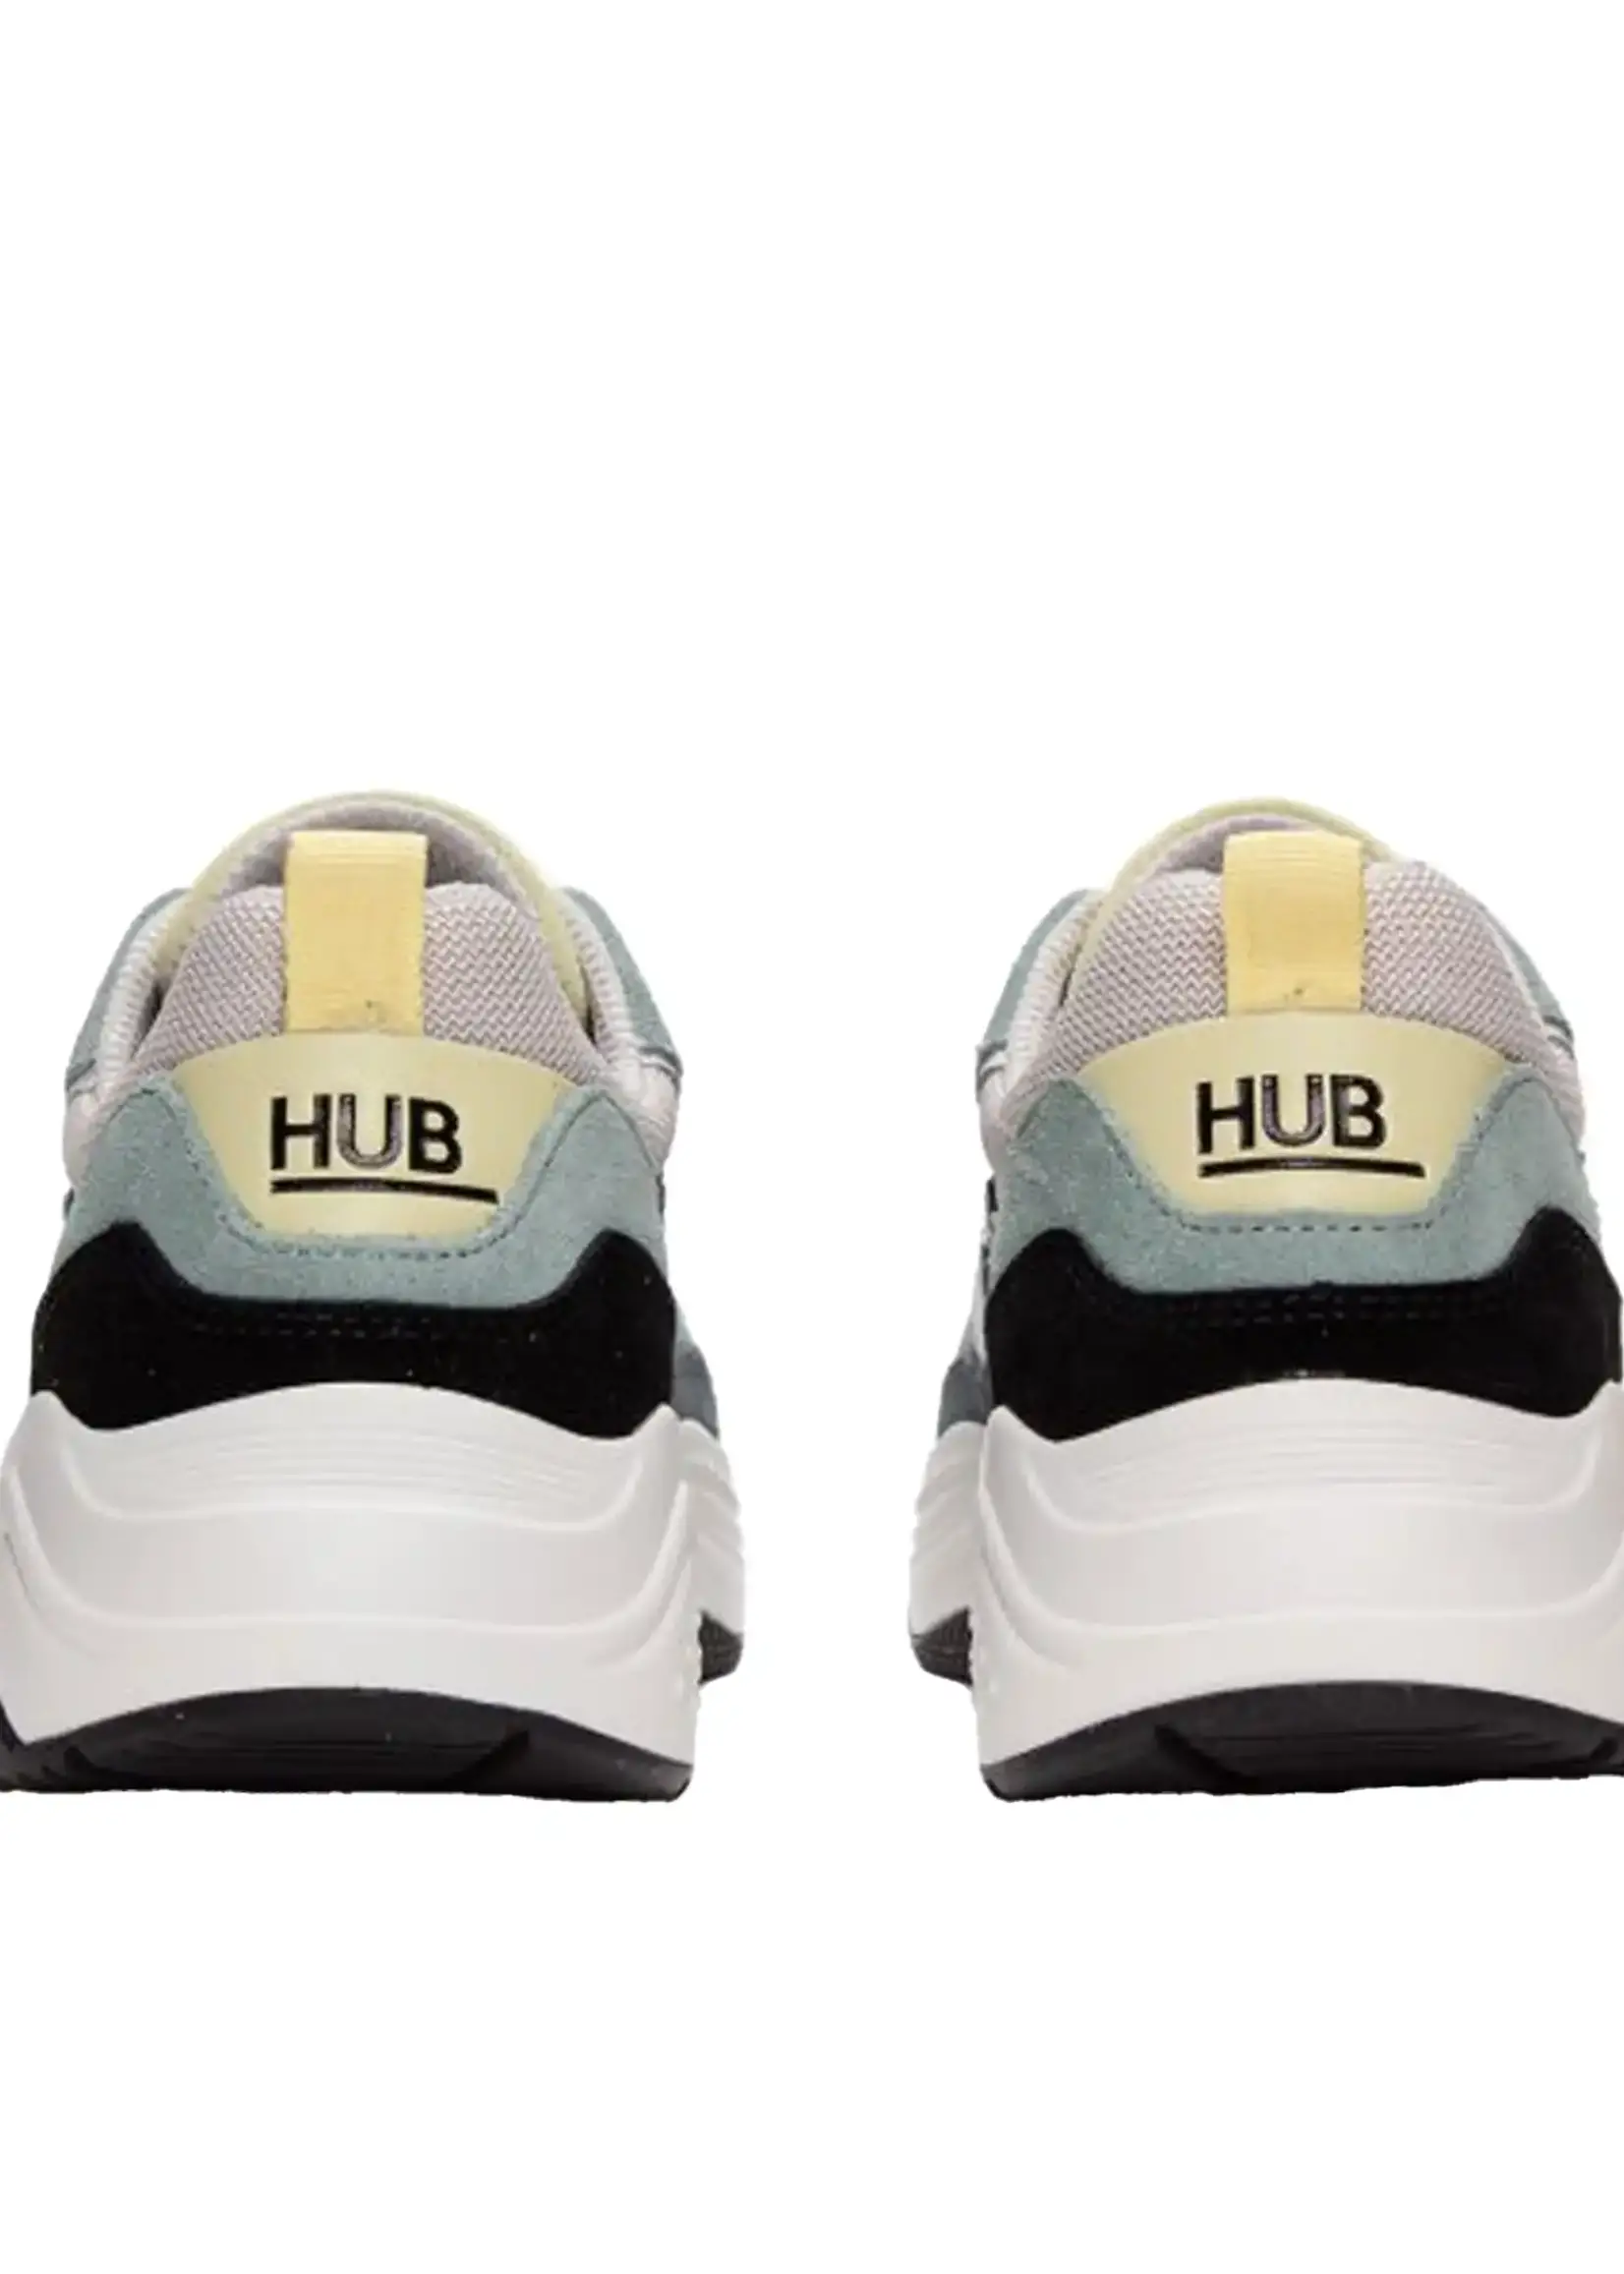 HUB Glide S43  Bone White/Green/Black